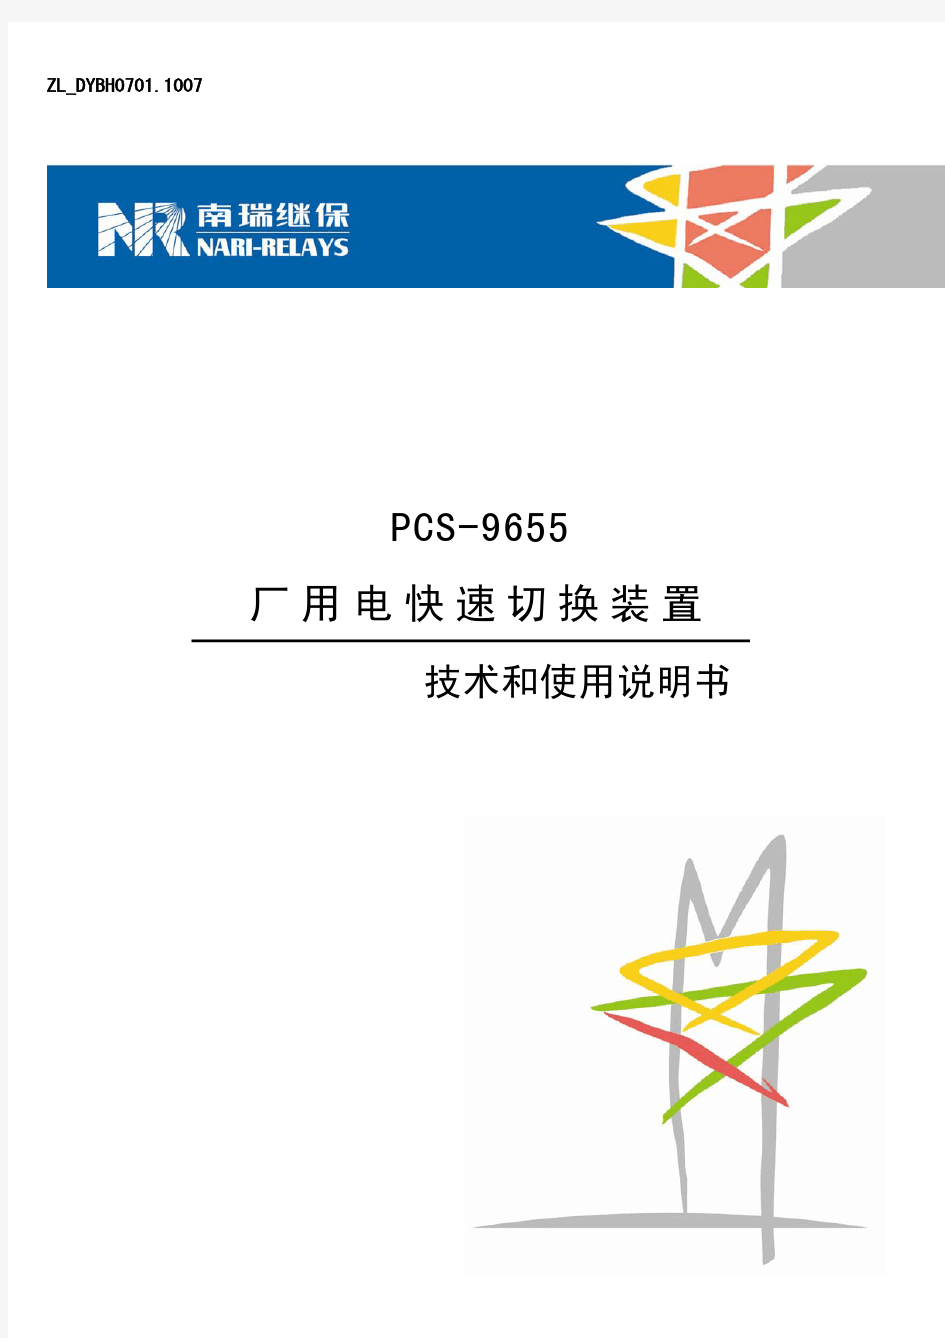 PCS-9655电源快速切换装置说明书(ZL_DYBH0701.1007)